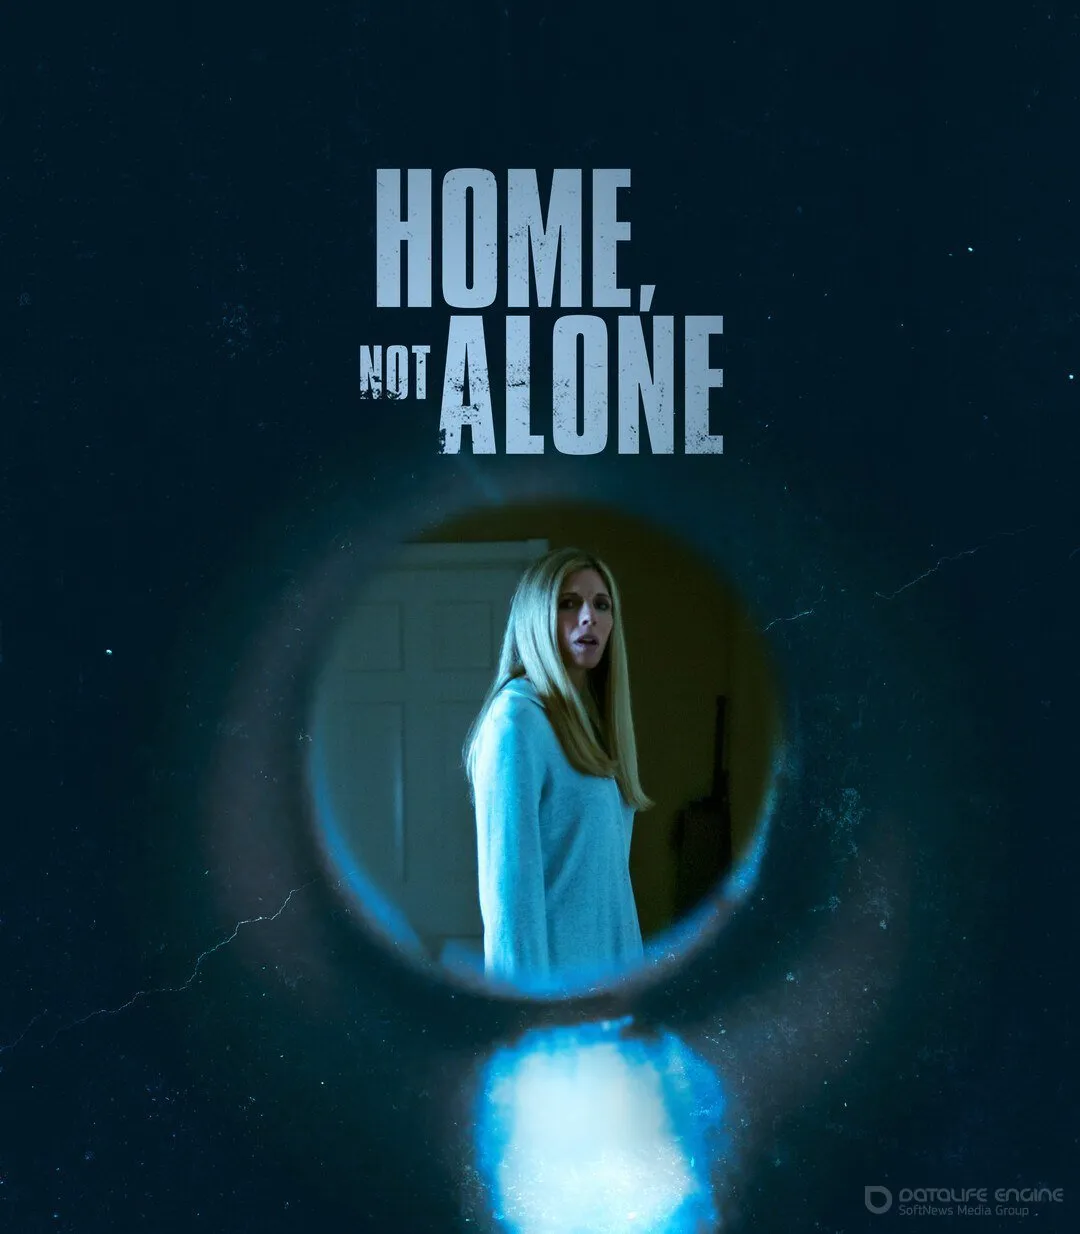 Постер к фильму "Не одни дома"